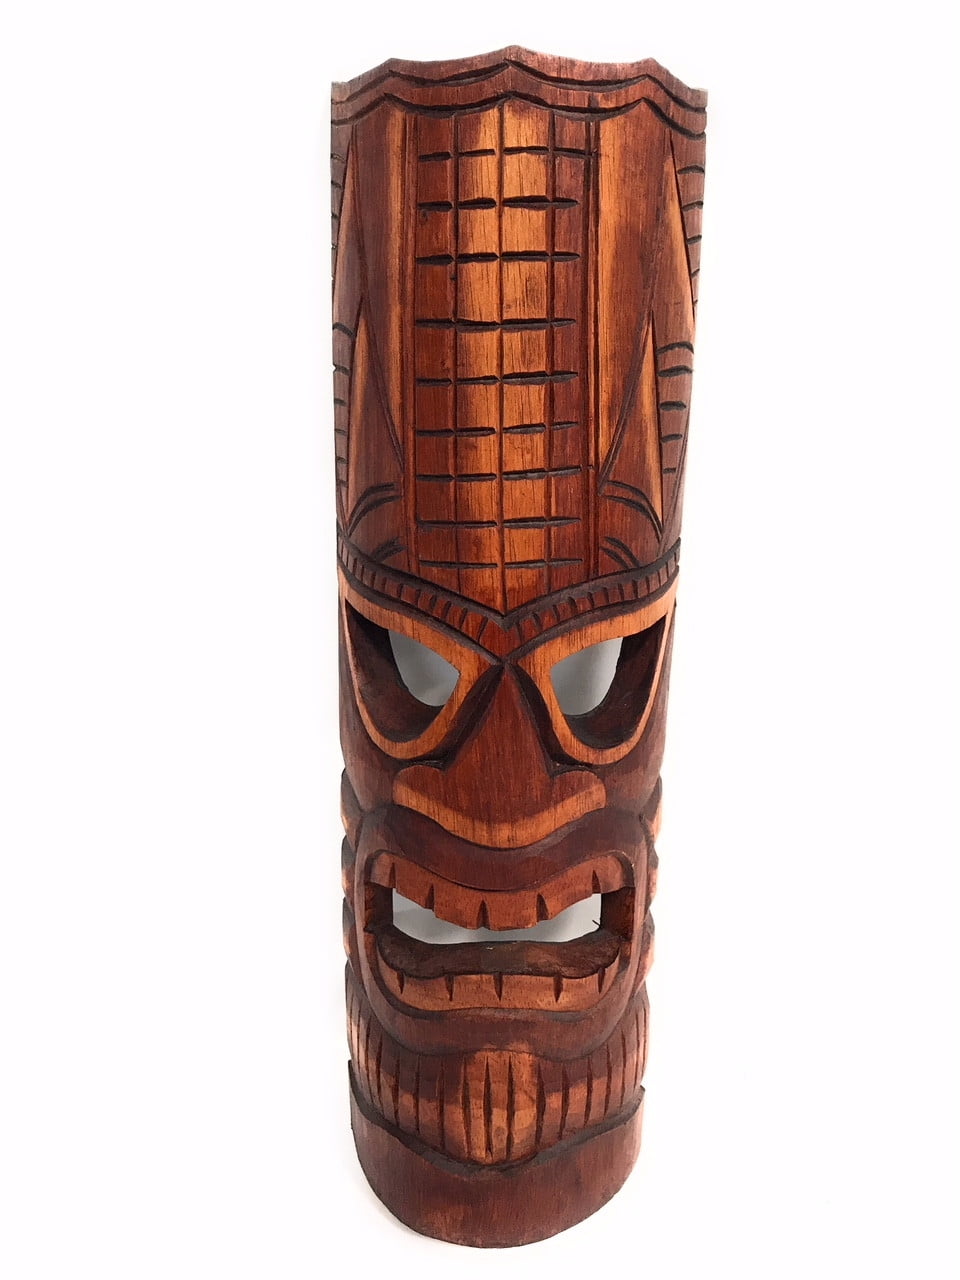 Hawaiian Tiki Bar Decor#ksa902350 Big Kahuna Tiki Mask 20" 